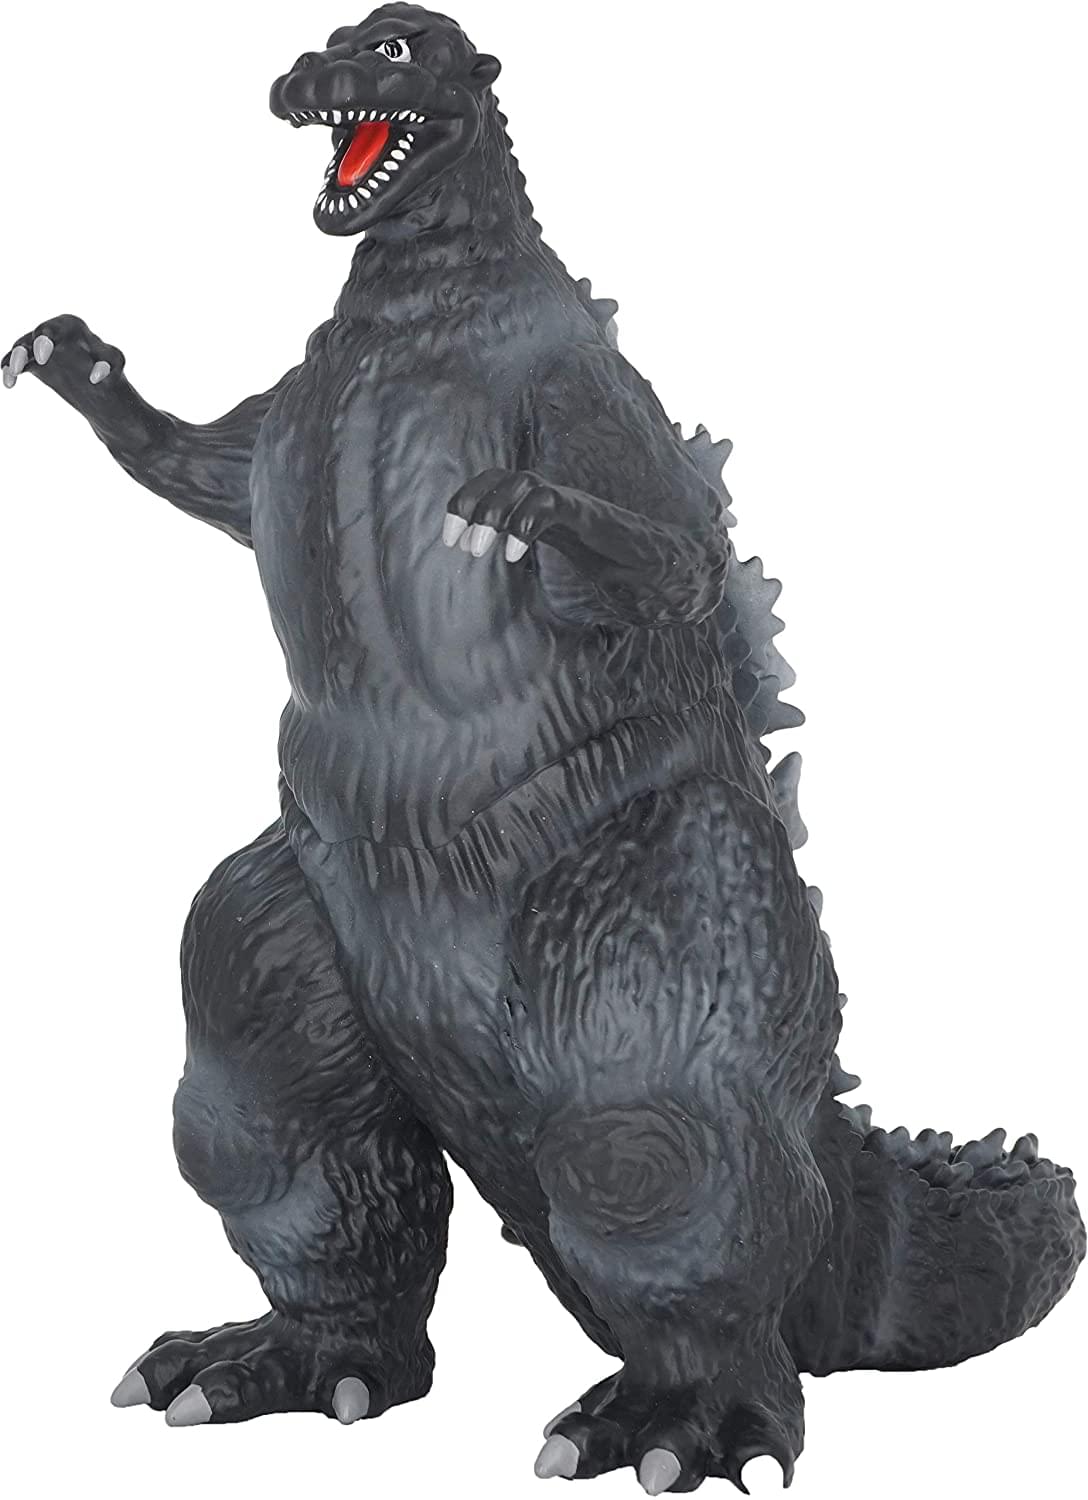 Godzilla Classic 11 Inch PVC Figural Bank